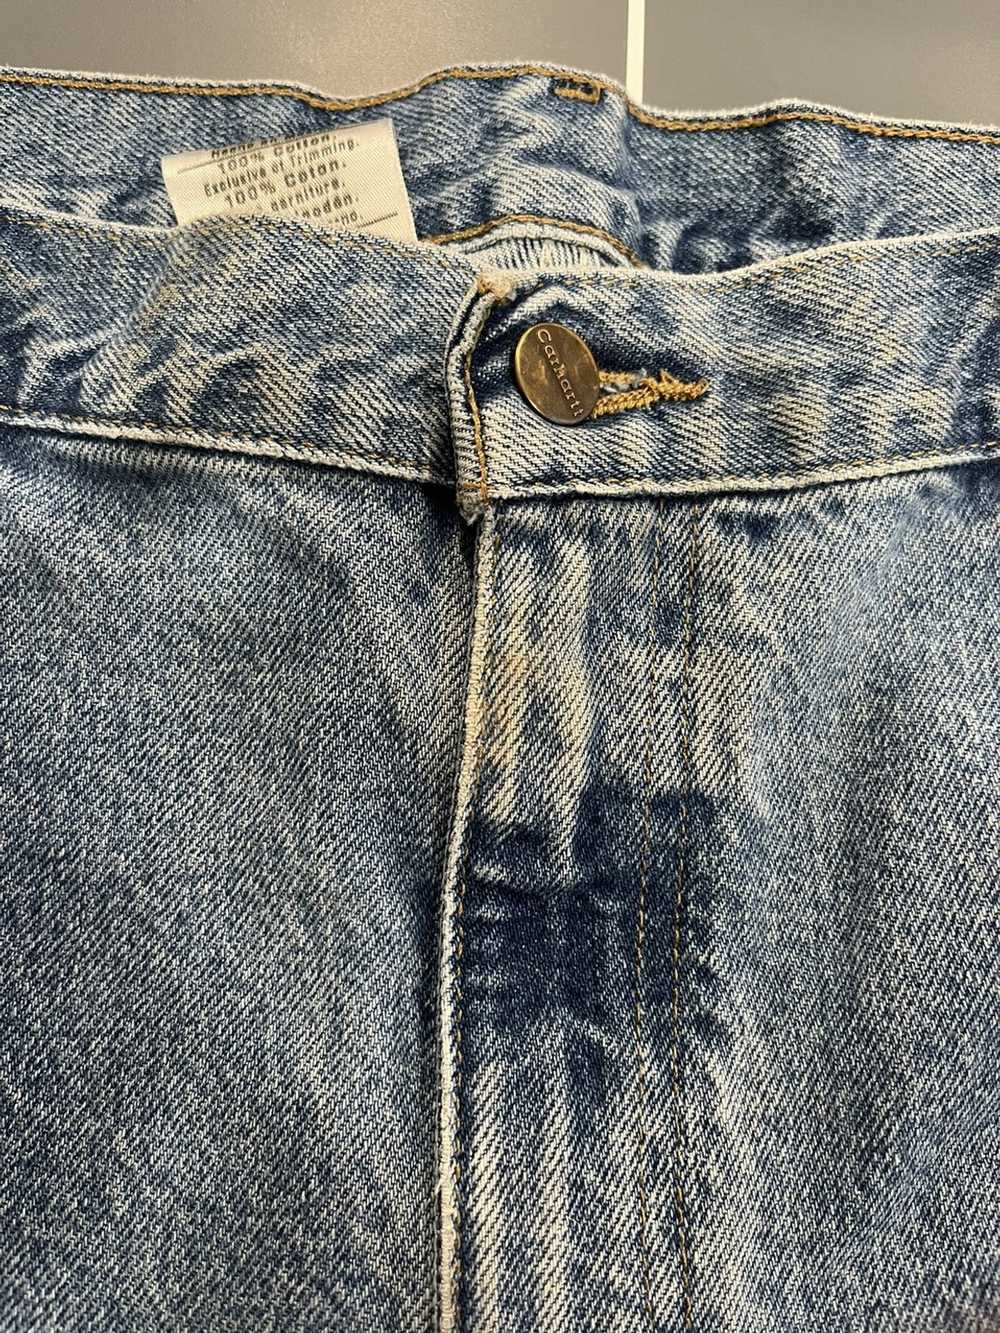 Carhartt × Vintage Vintage Carhartt Denim Jeans - image 7